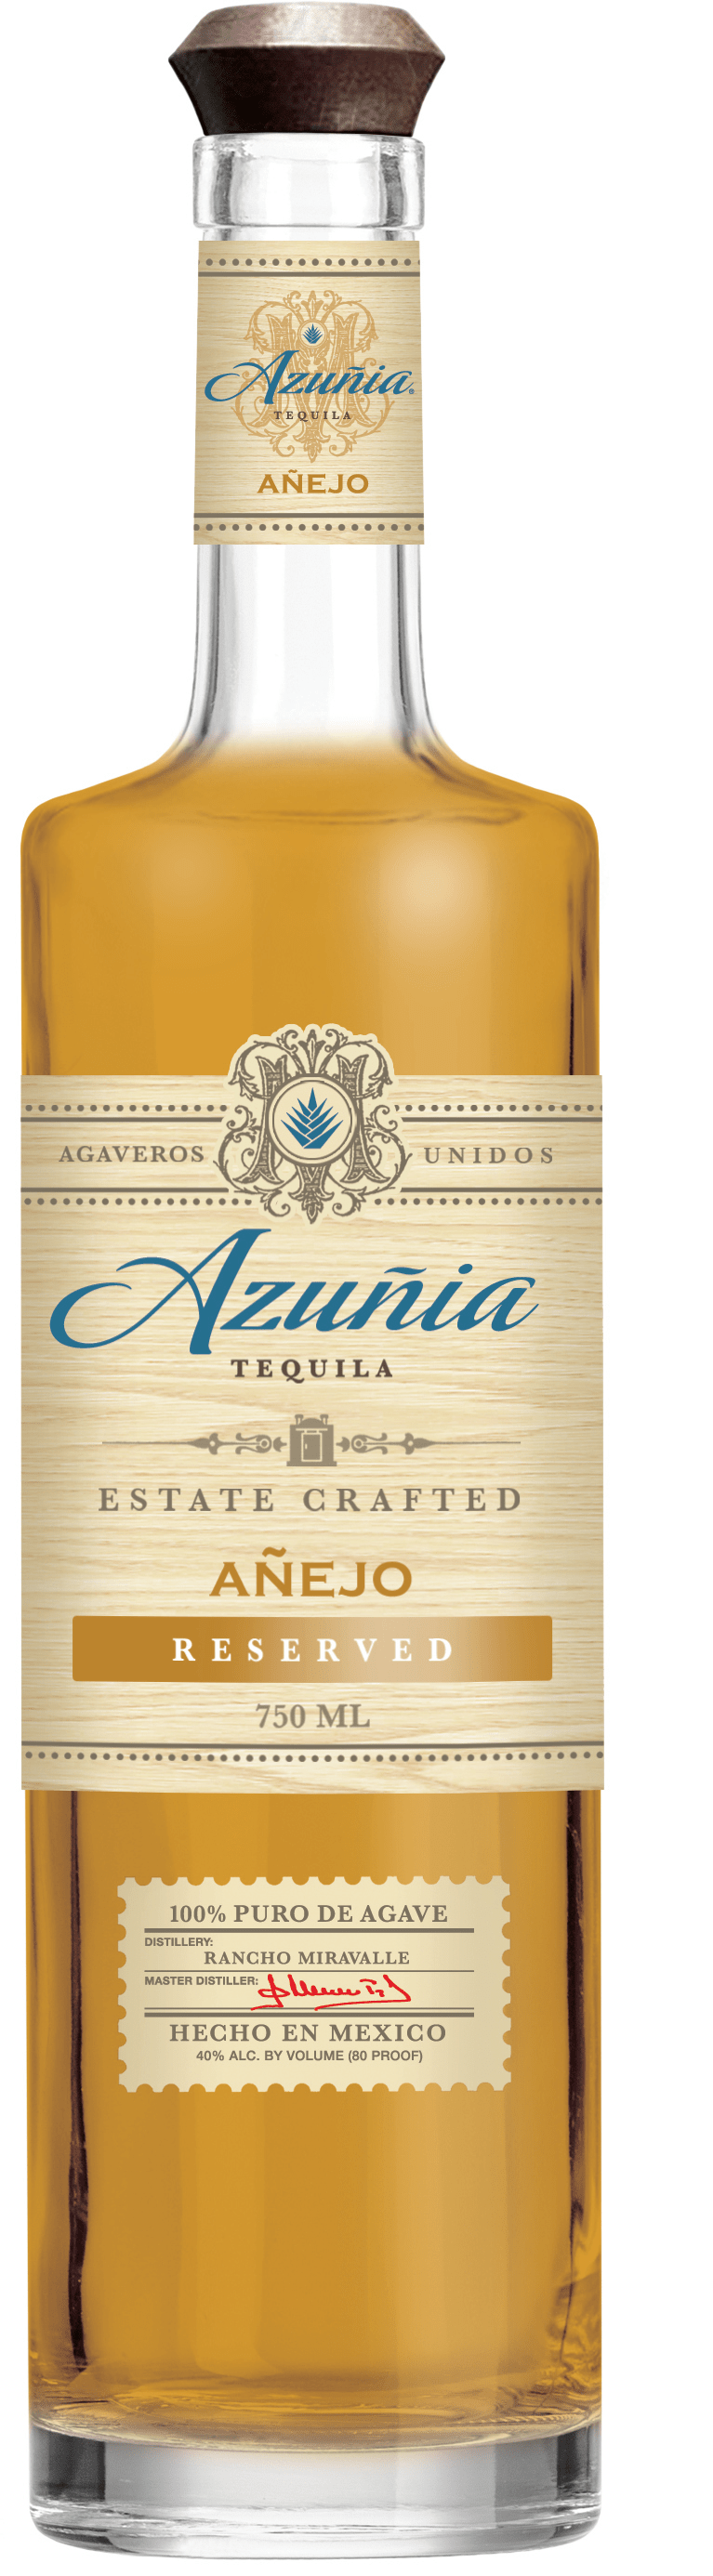 Azunia Anejo Tequila Reserve - Barbank